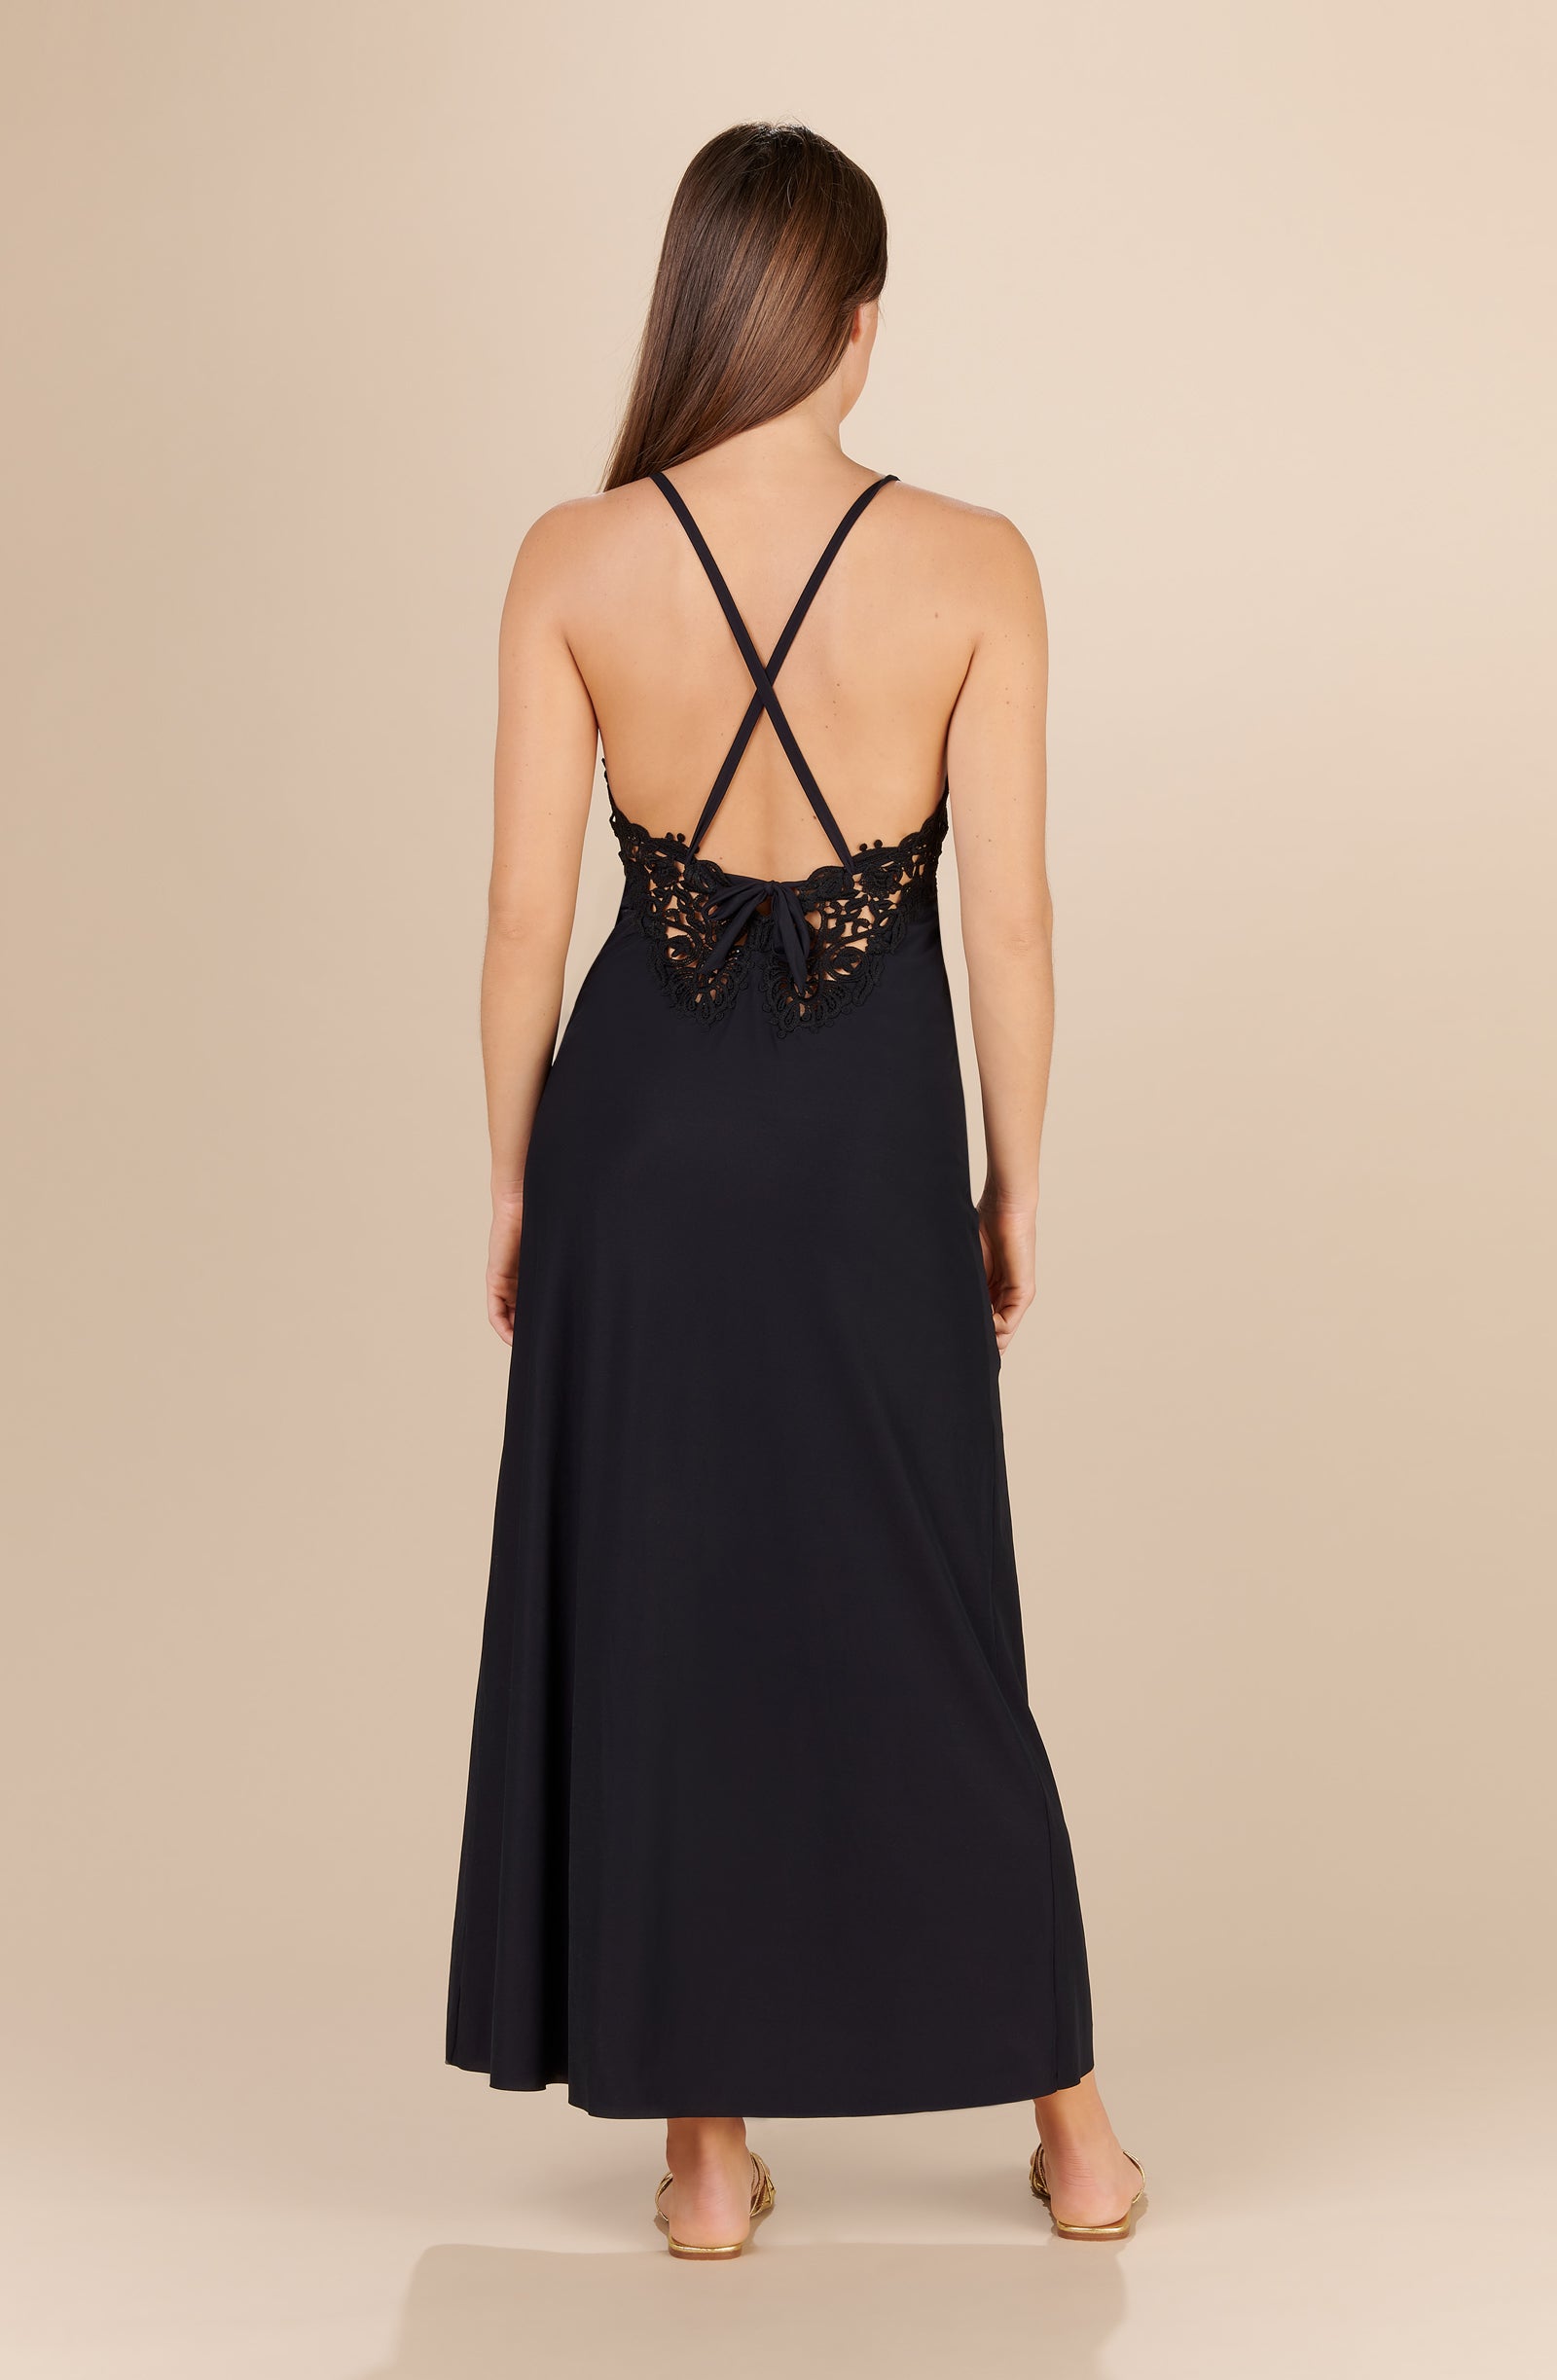 rowan - Long black halter neck dress